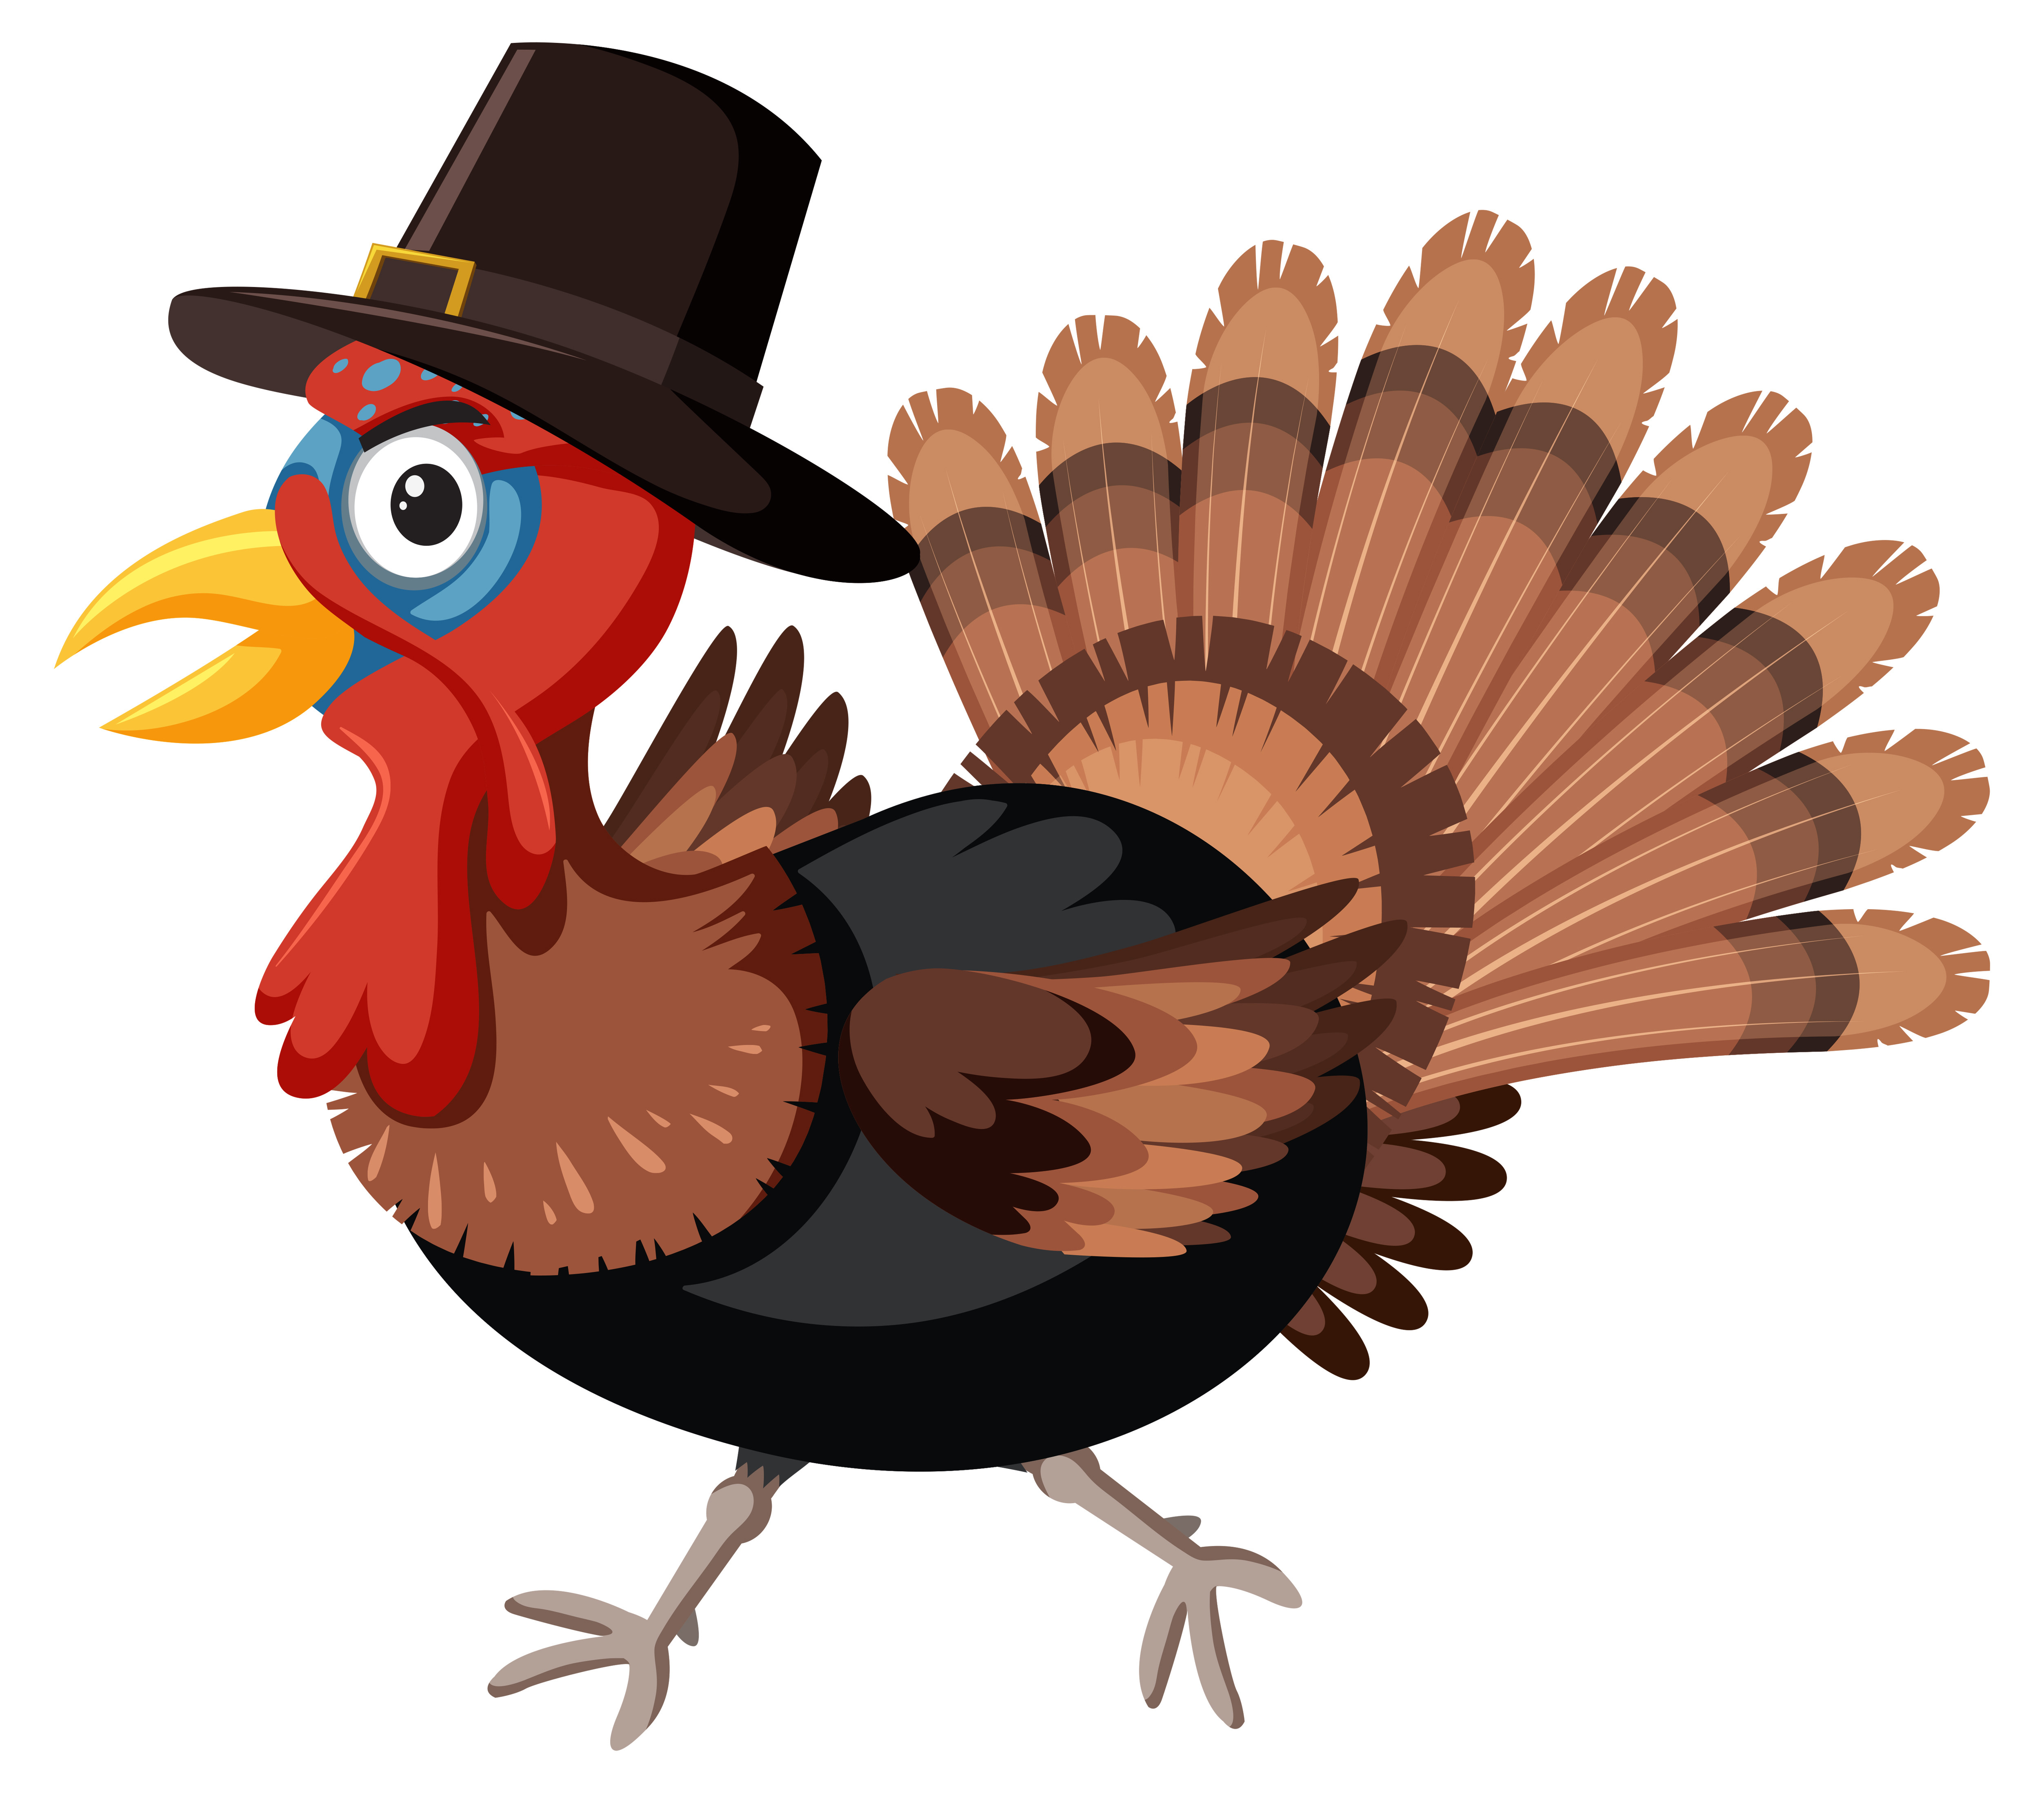 Thanksgiving Turkey Vector
 Thanksgiving turkey with hat Download Free Vector Art